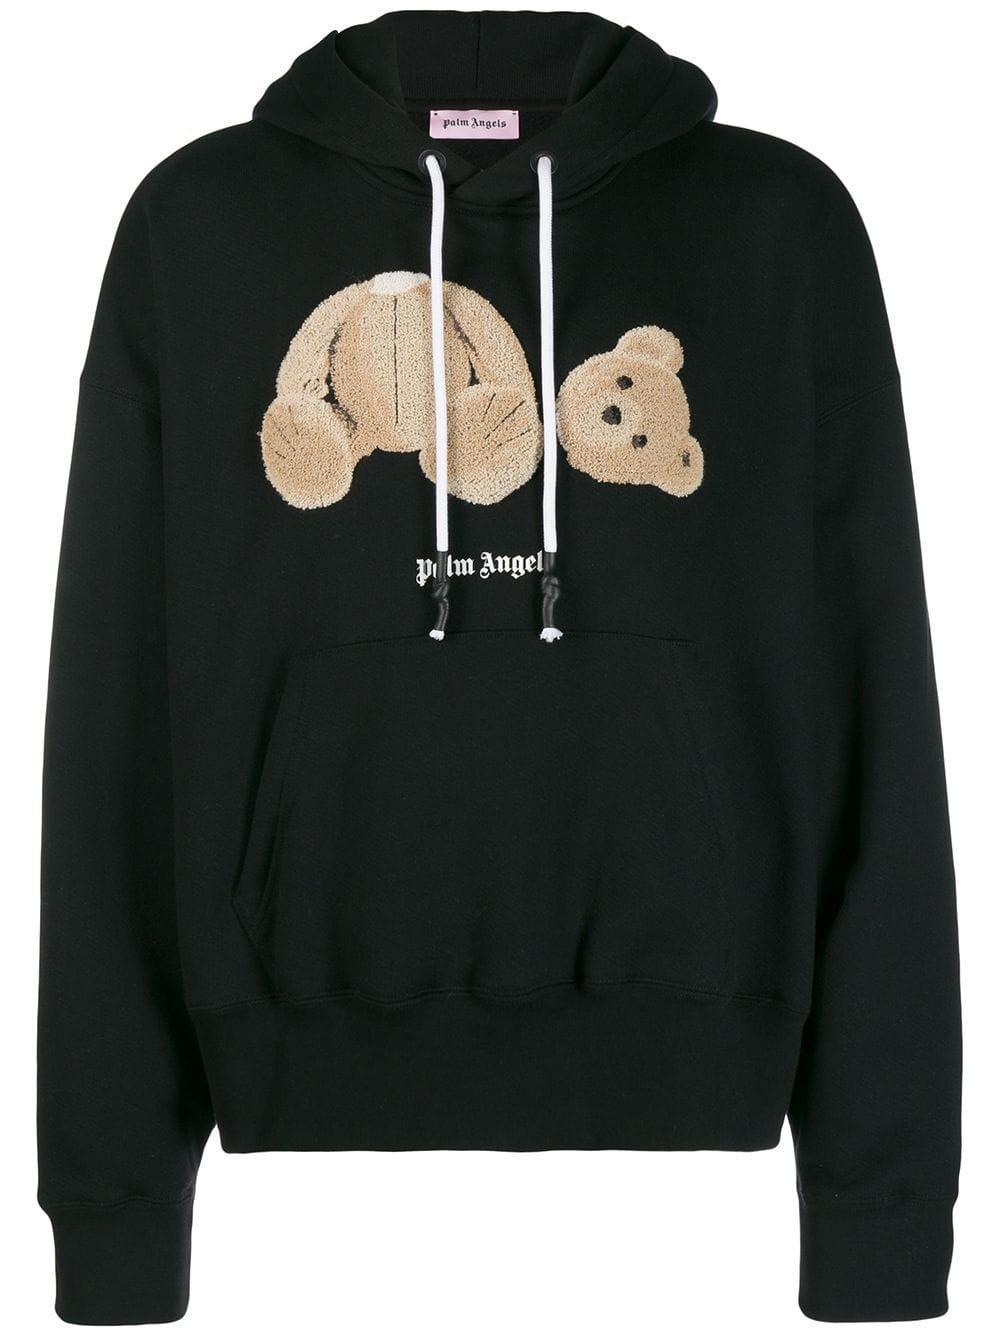 Palm Angels Teddy Bear Hooded Sweatshirt in Black for Men - Lyst